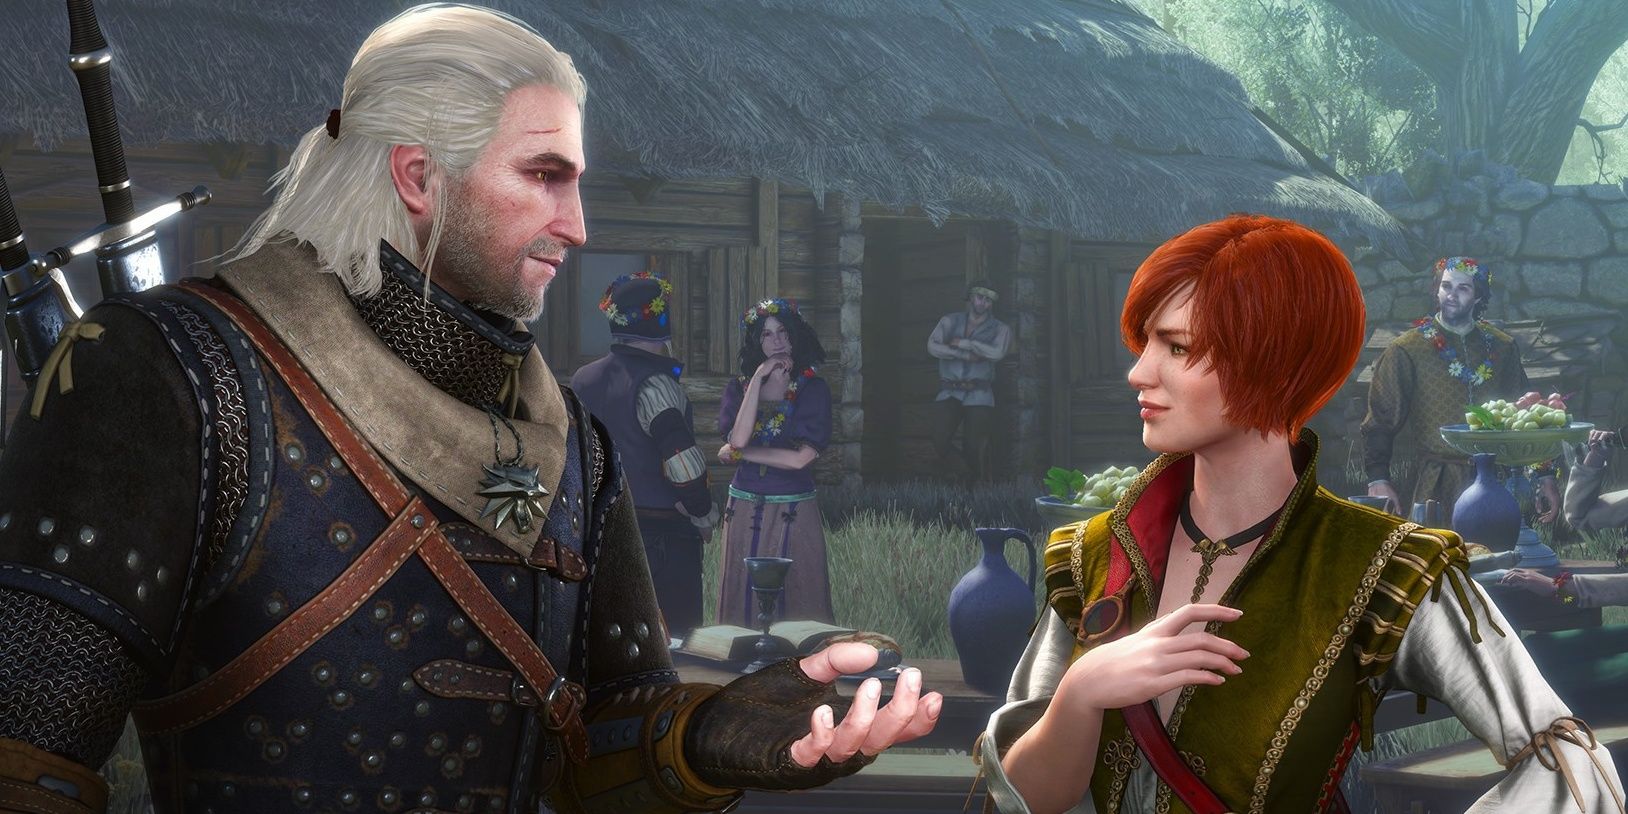 Shani and Geralt Talking